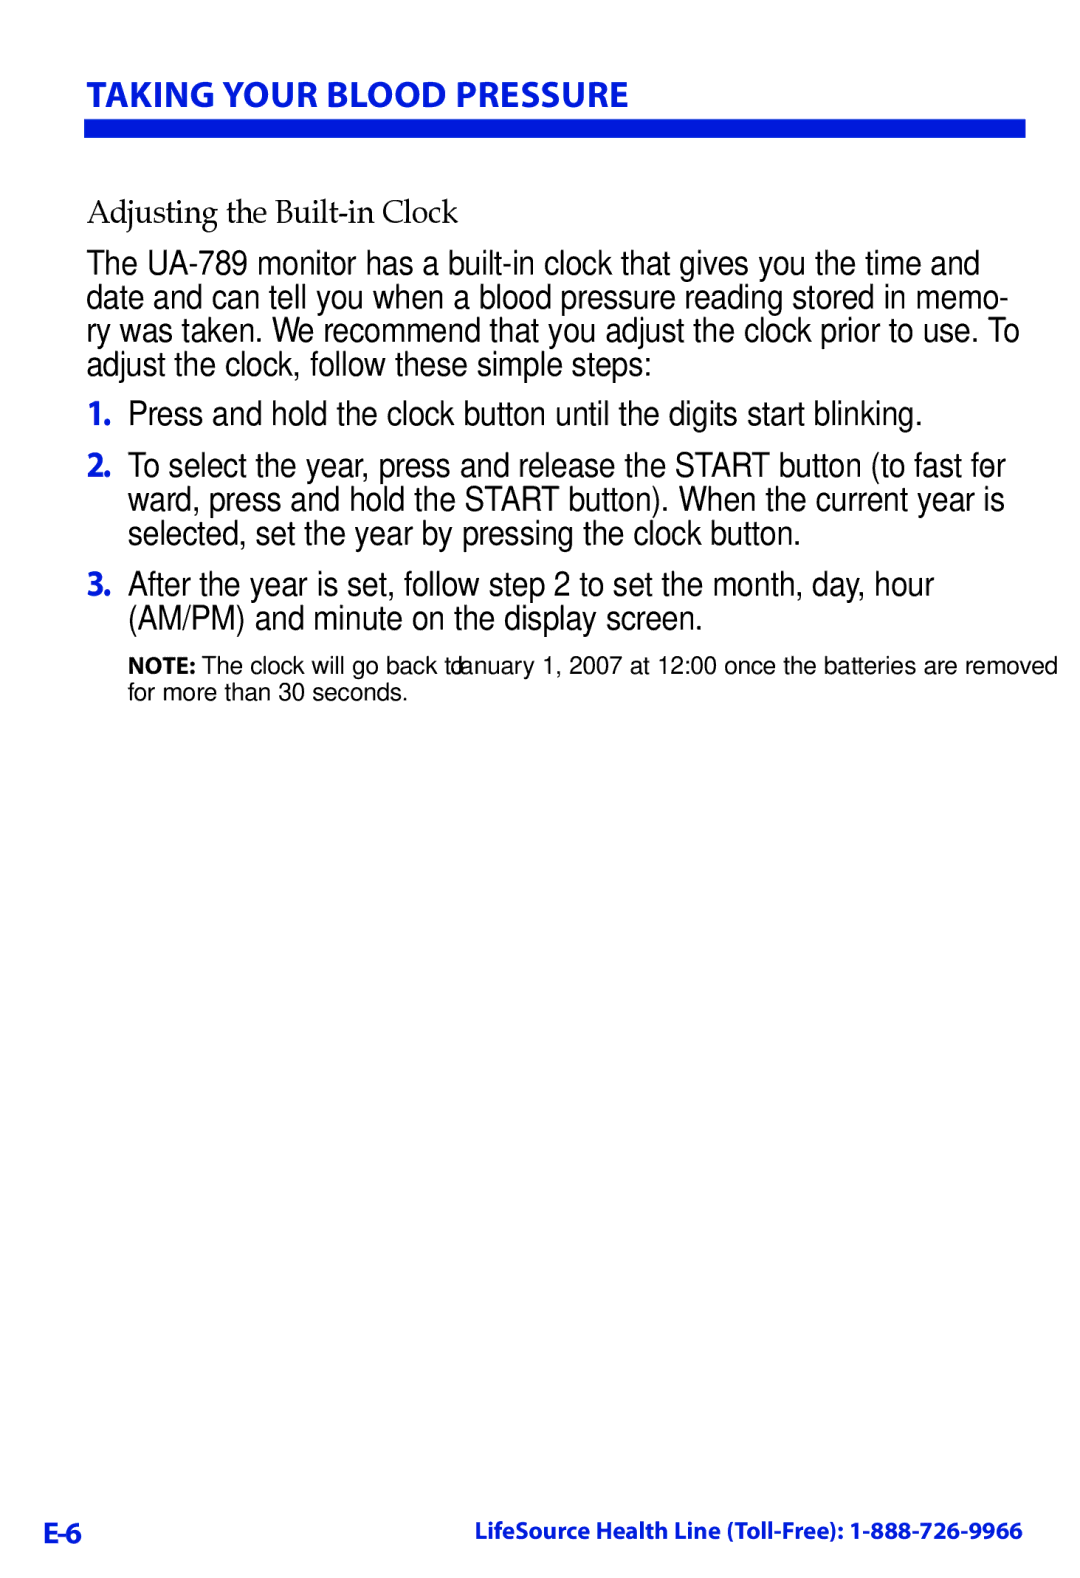 LifeSource UA-789 manual Taking Your Blood Pressure, Adjusting the Built-in Clock 